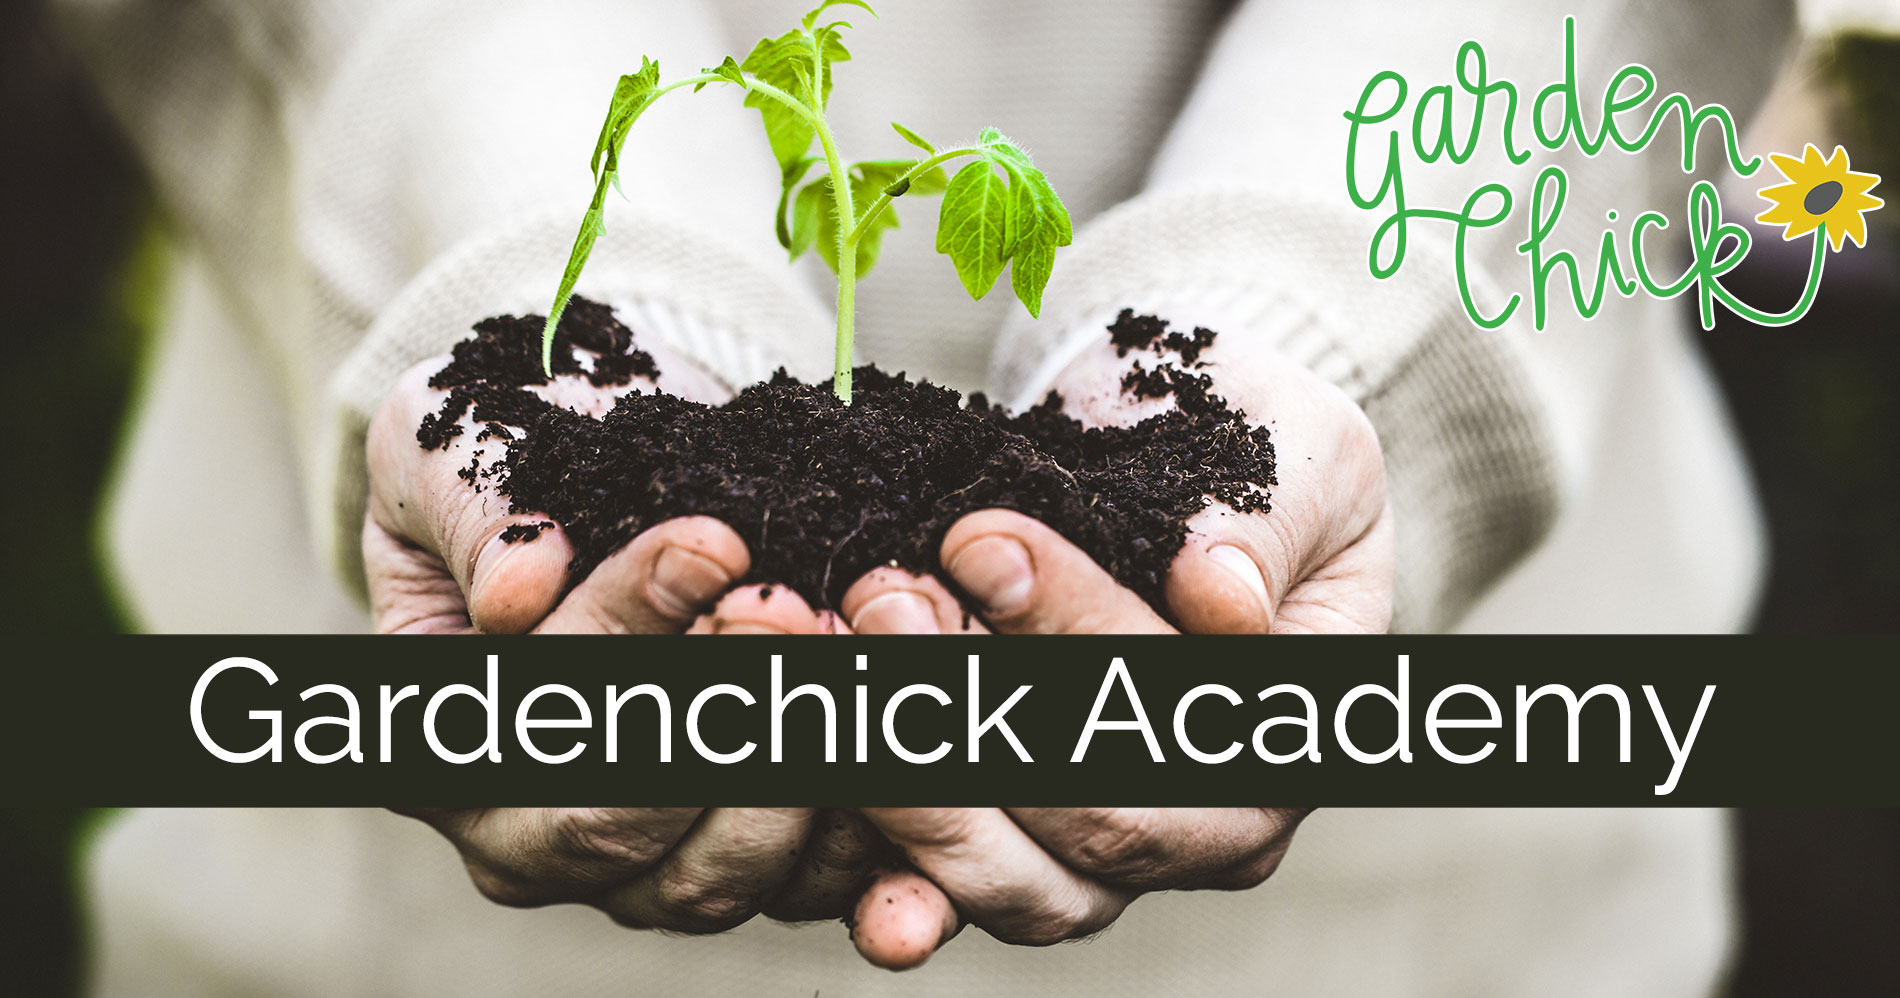 the Gardenchick Academy